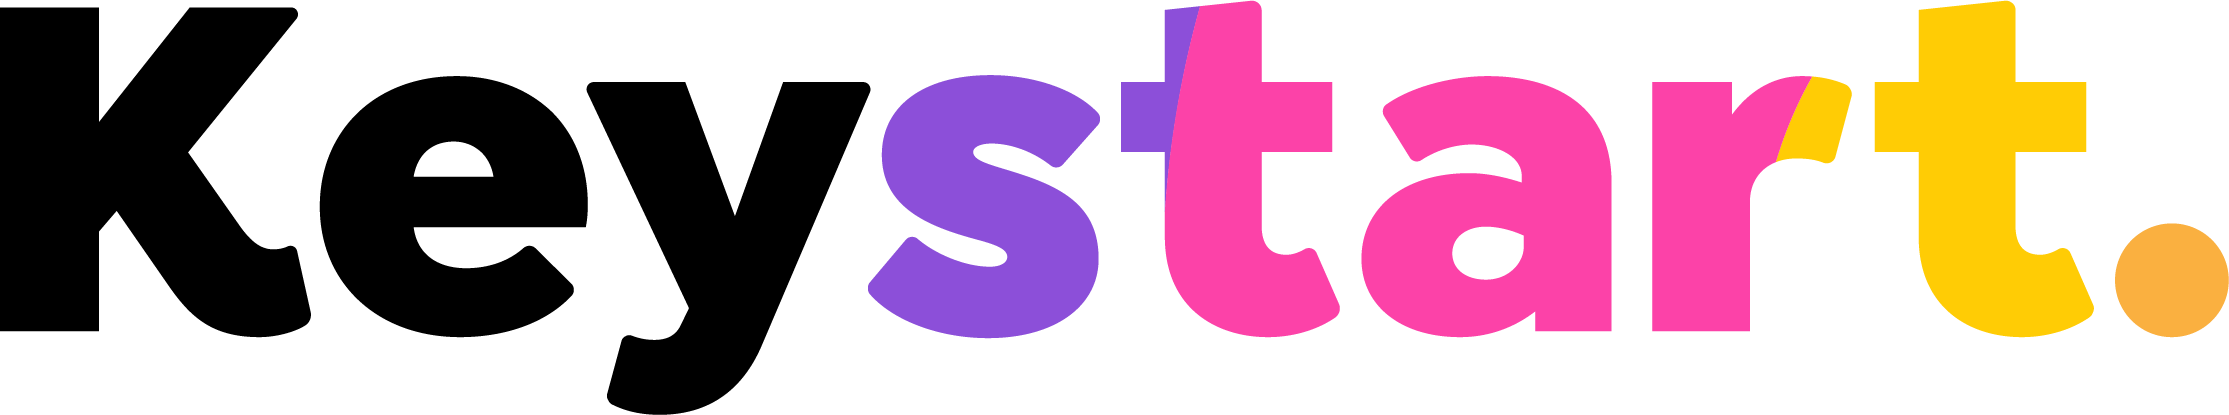 Keystart logo